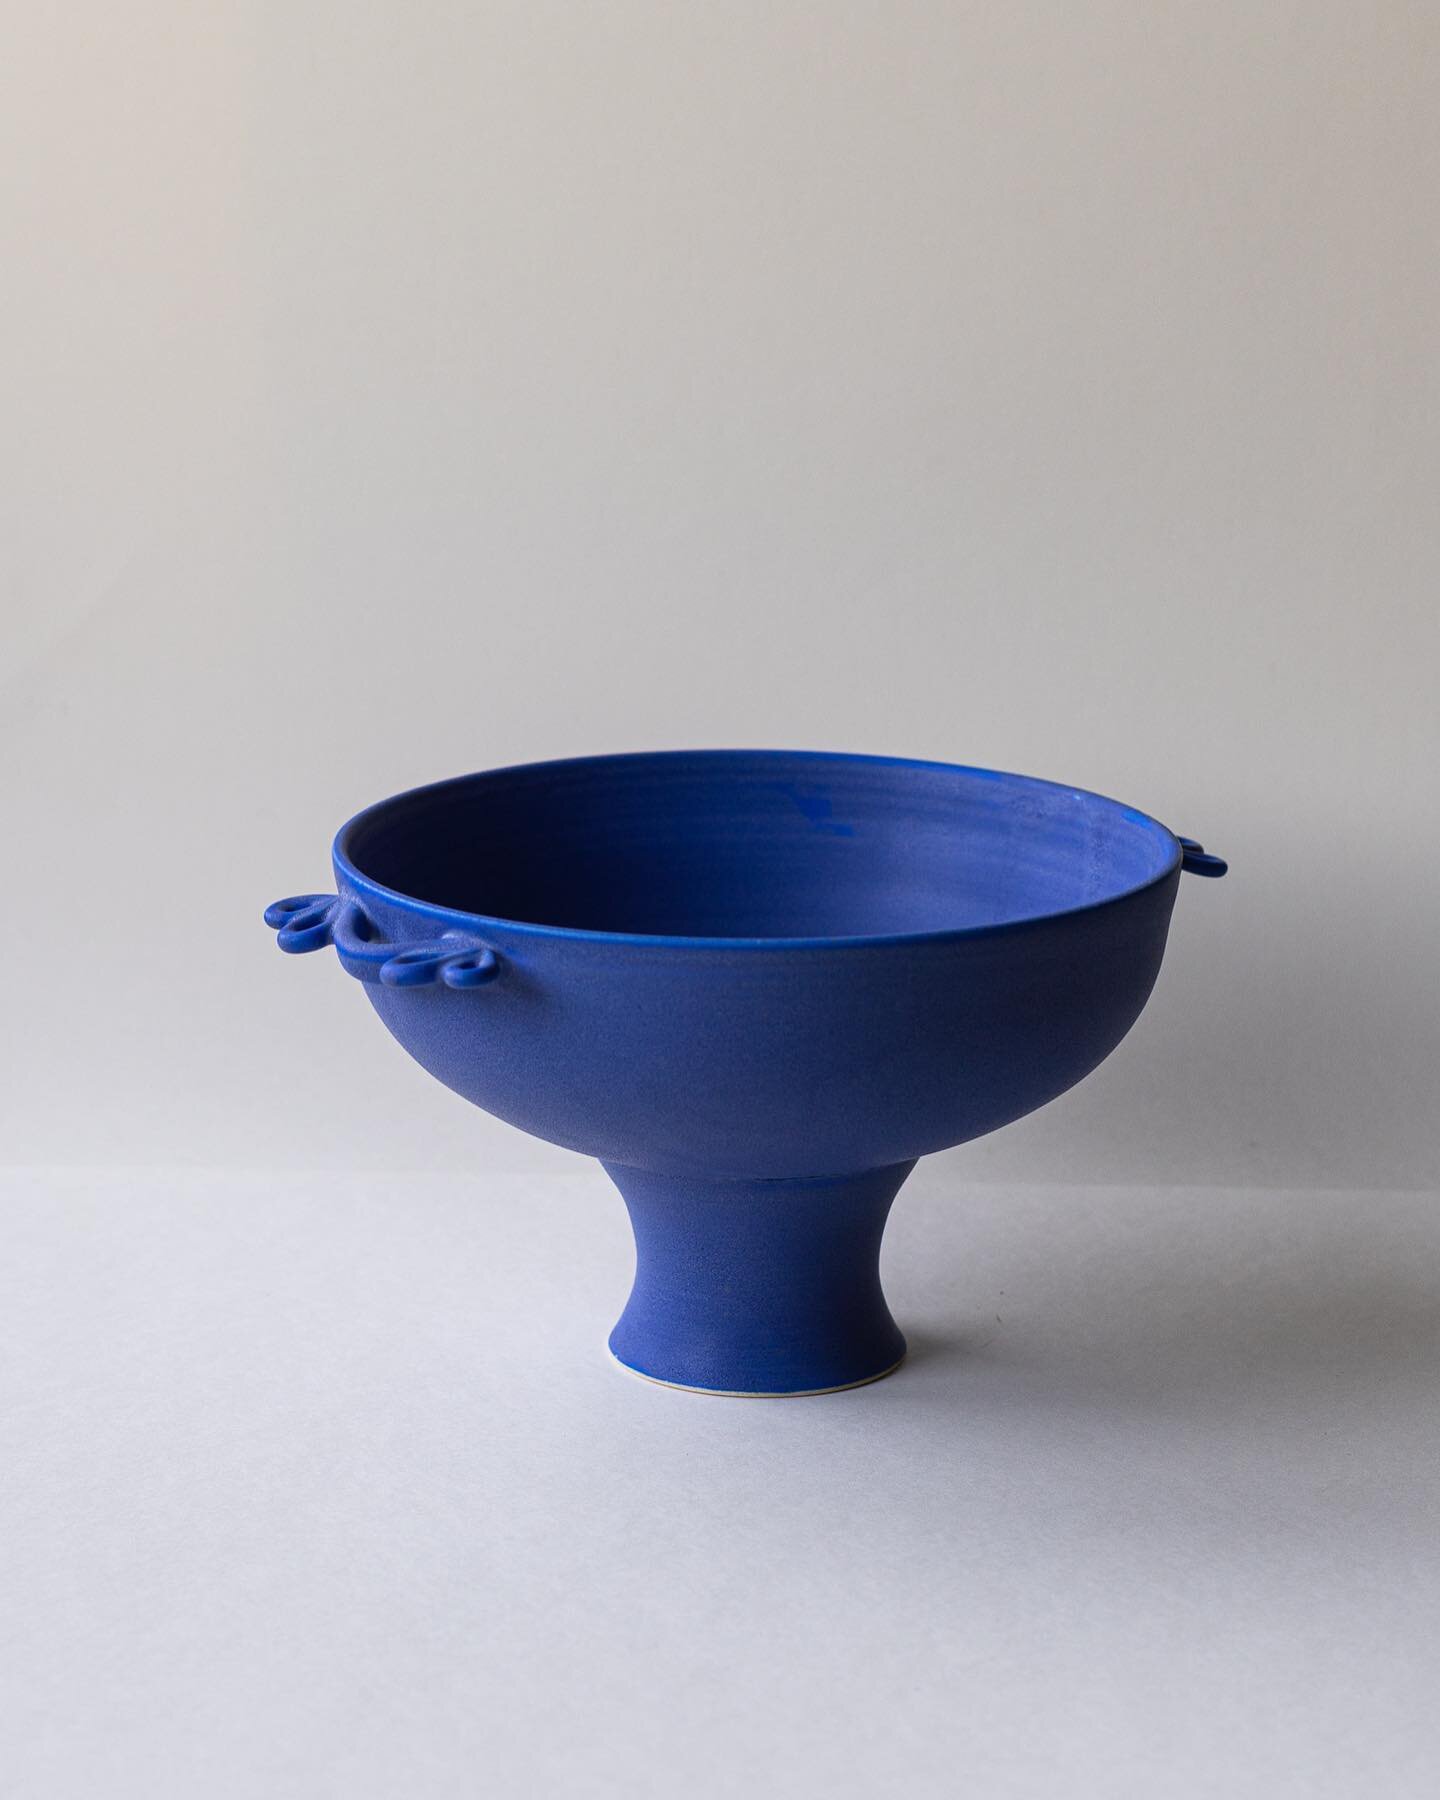 💙 &mdash; still available online

.
.
.
.
.
.
.
.
#pottery #ceramics #potterywheel #wheelthrown #throwing #handmade #potteryforall #studiopottery #studioceramics #matteglaze #centerpiece #fruitbowl